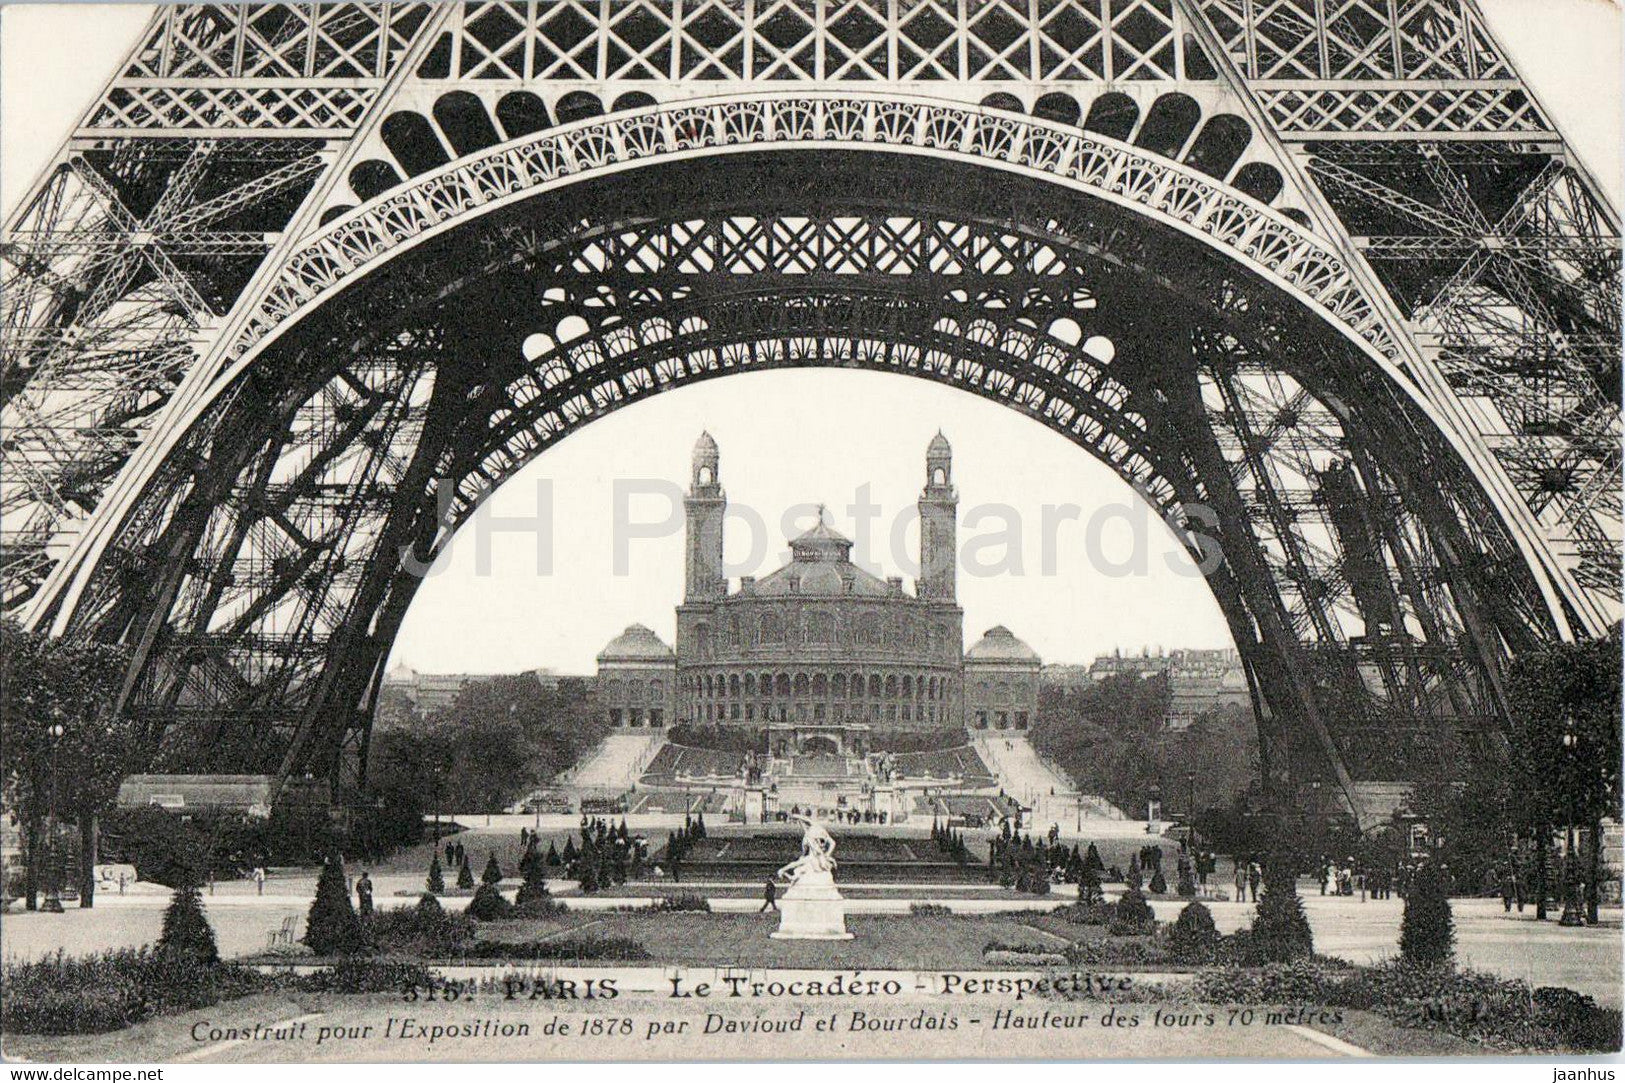 Paris - Le Trocadero - Perspective - 515 - old postcard - France - unused - JH Postcards